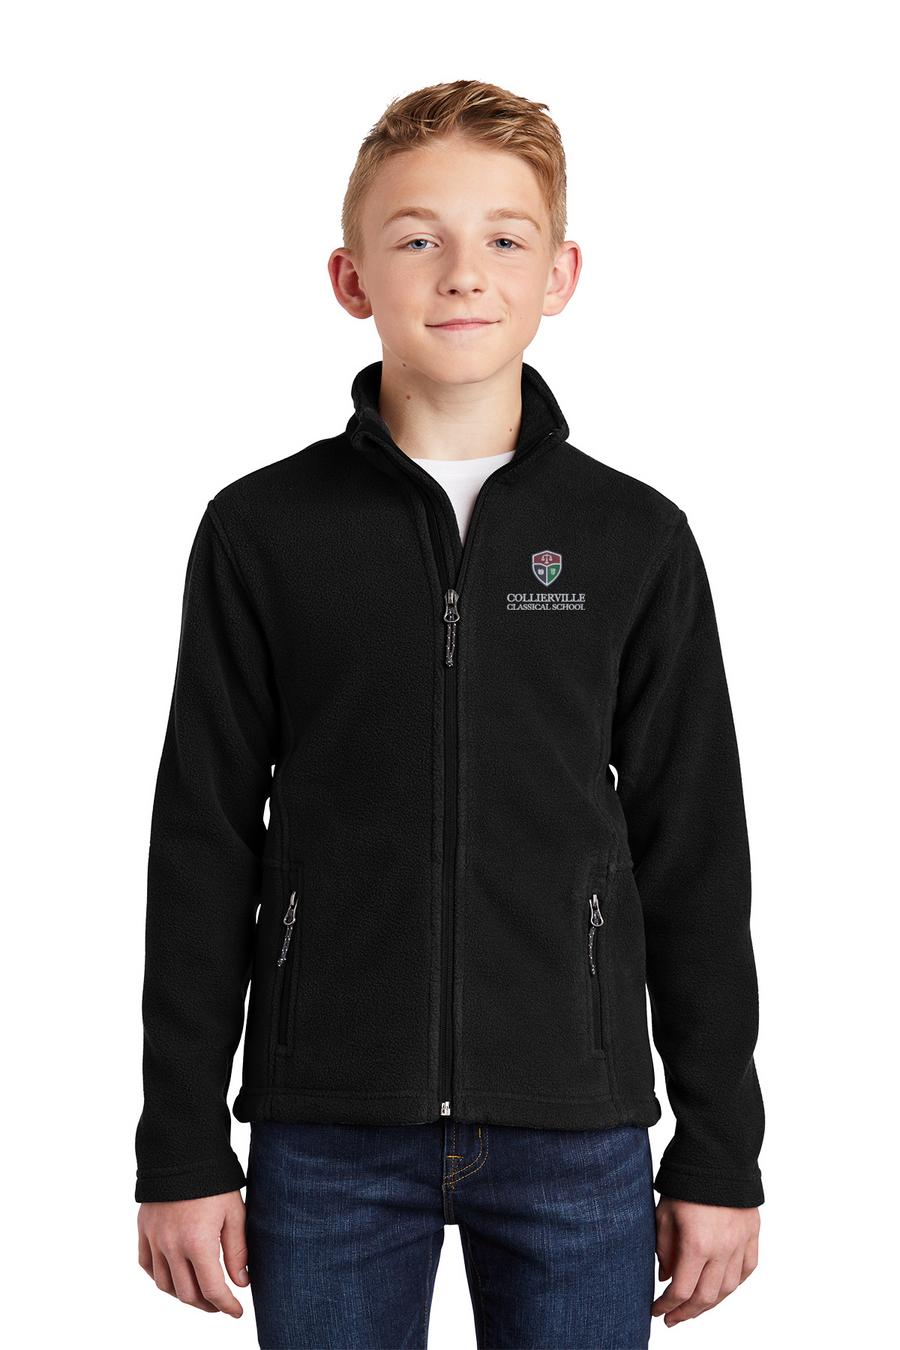 CCS - Y217 Port Authority Unisex Youth Value Fleece Jacket - Premium School Uniform from Pat's Monograms - Just $35! Shop now at Pat's Monograms